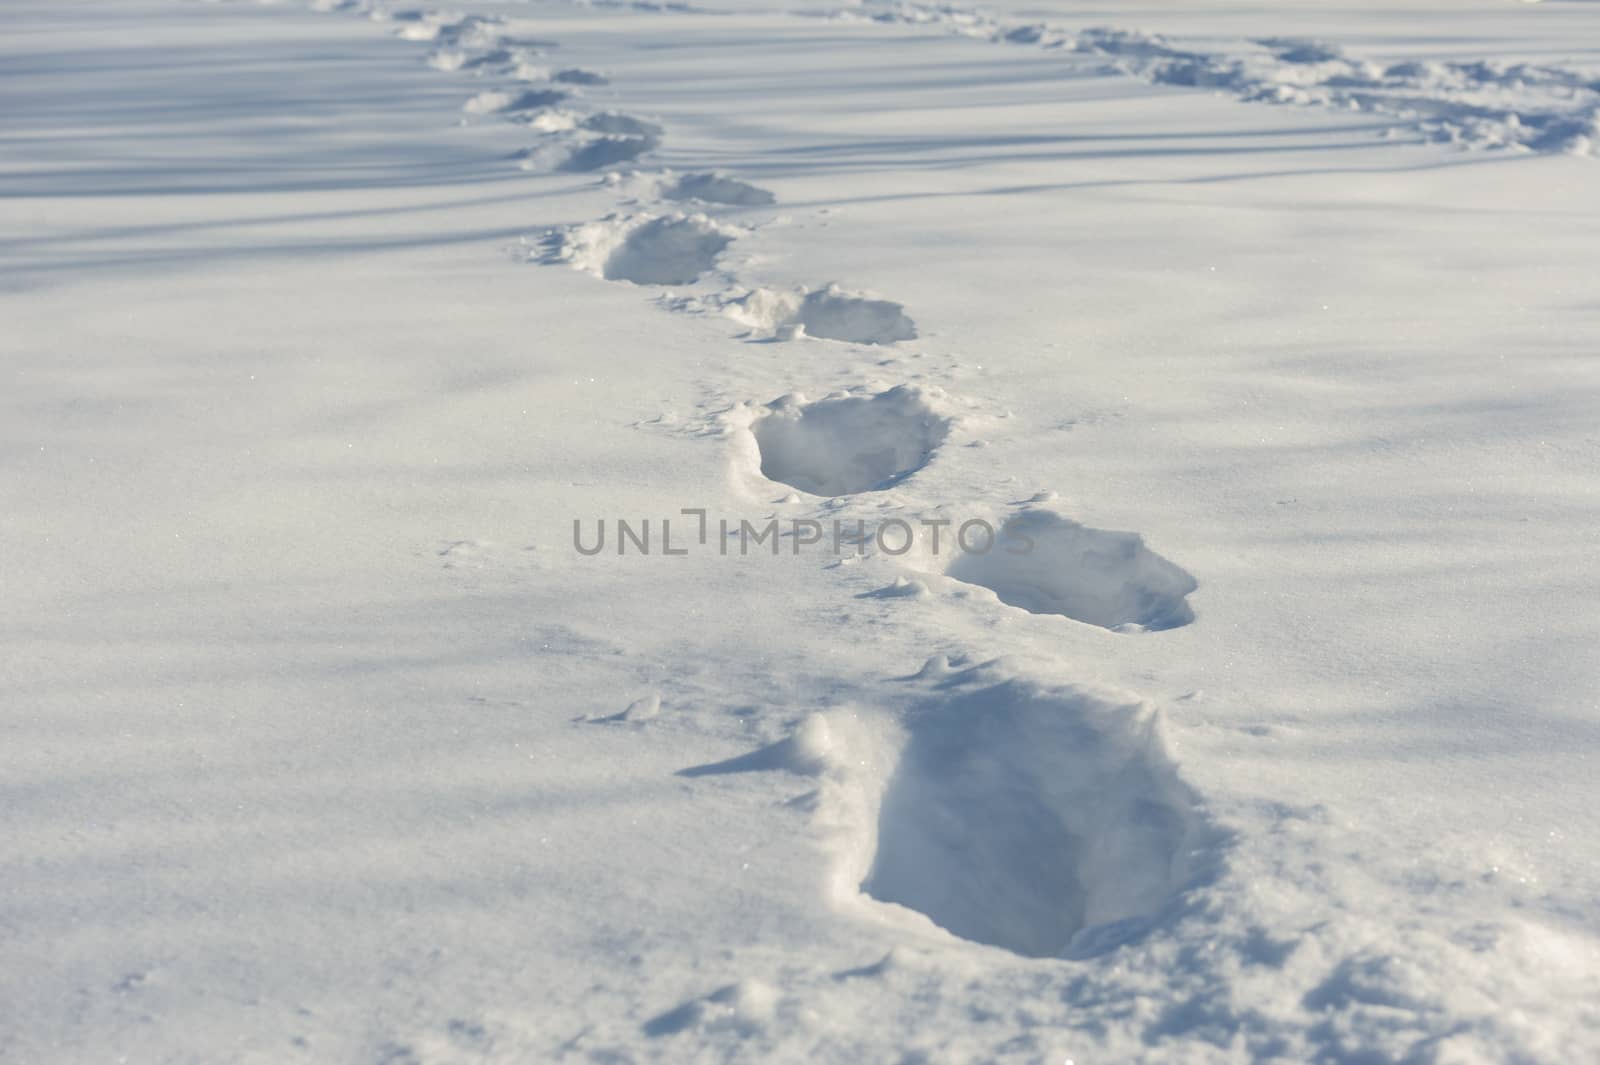 human tracks on the fresh white snow